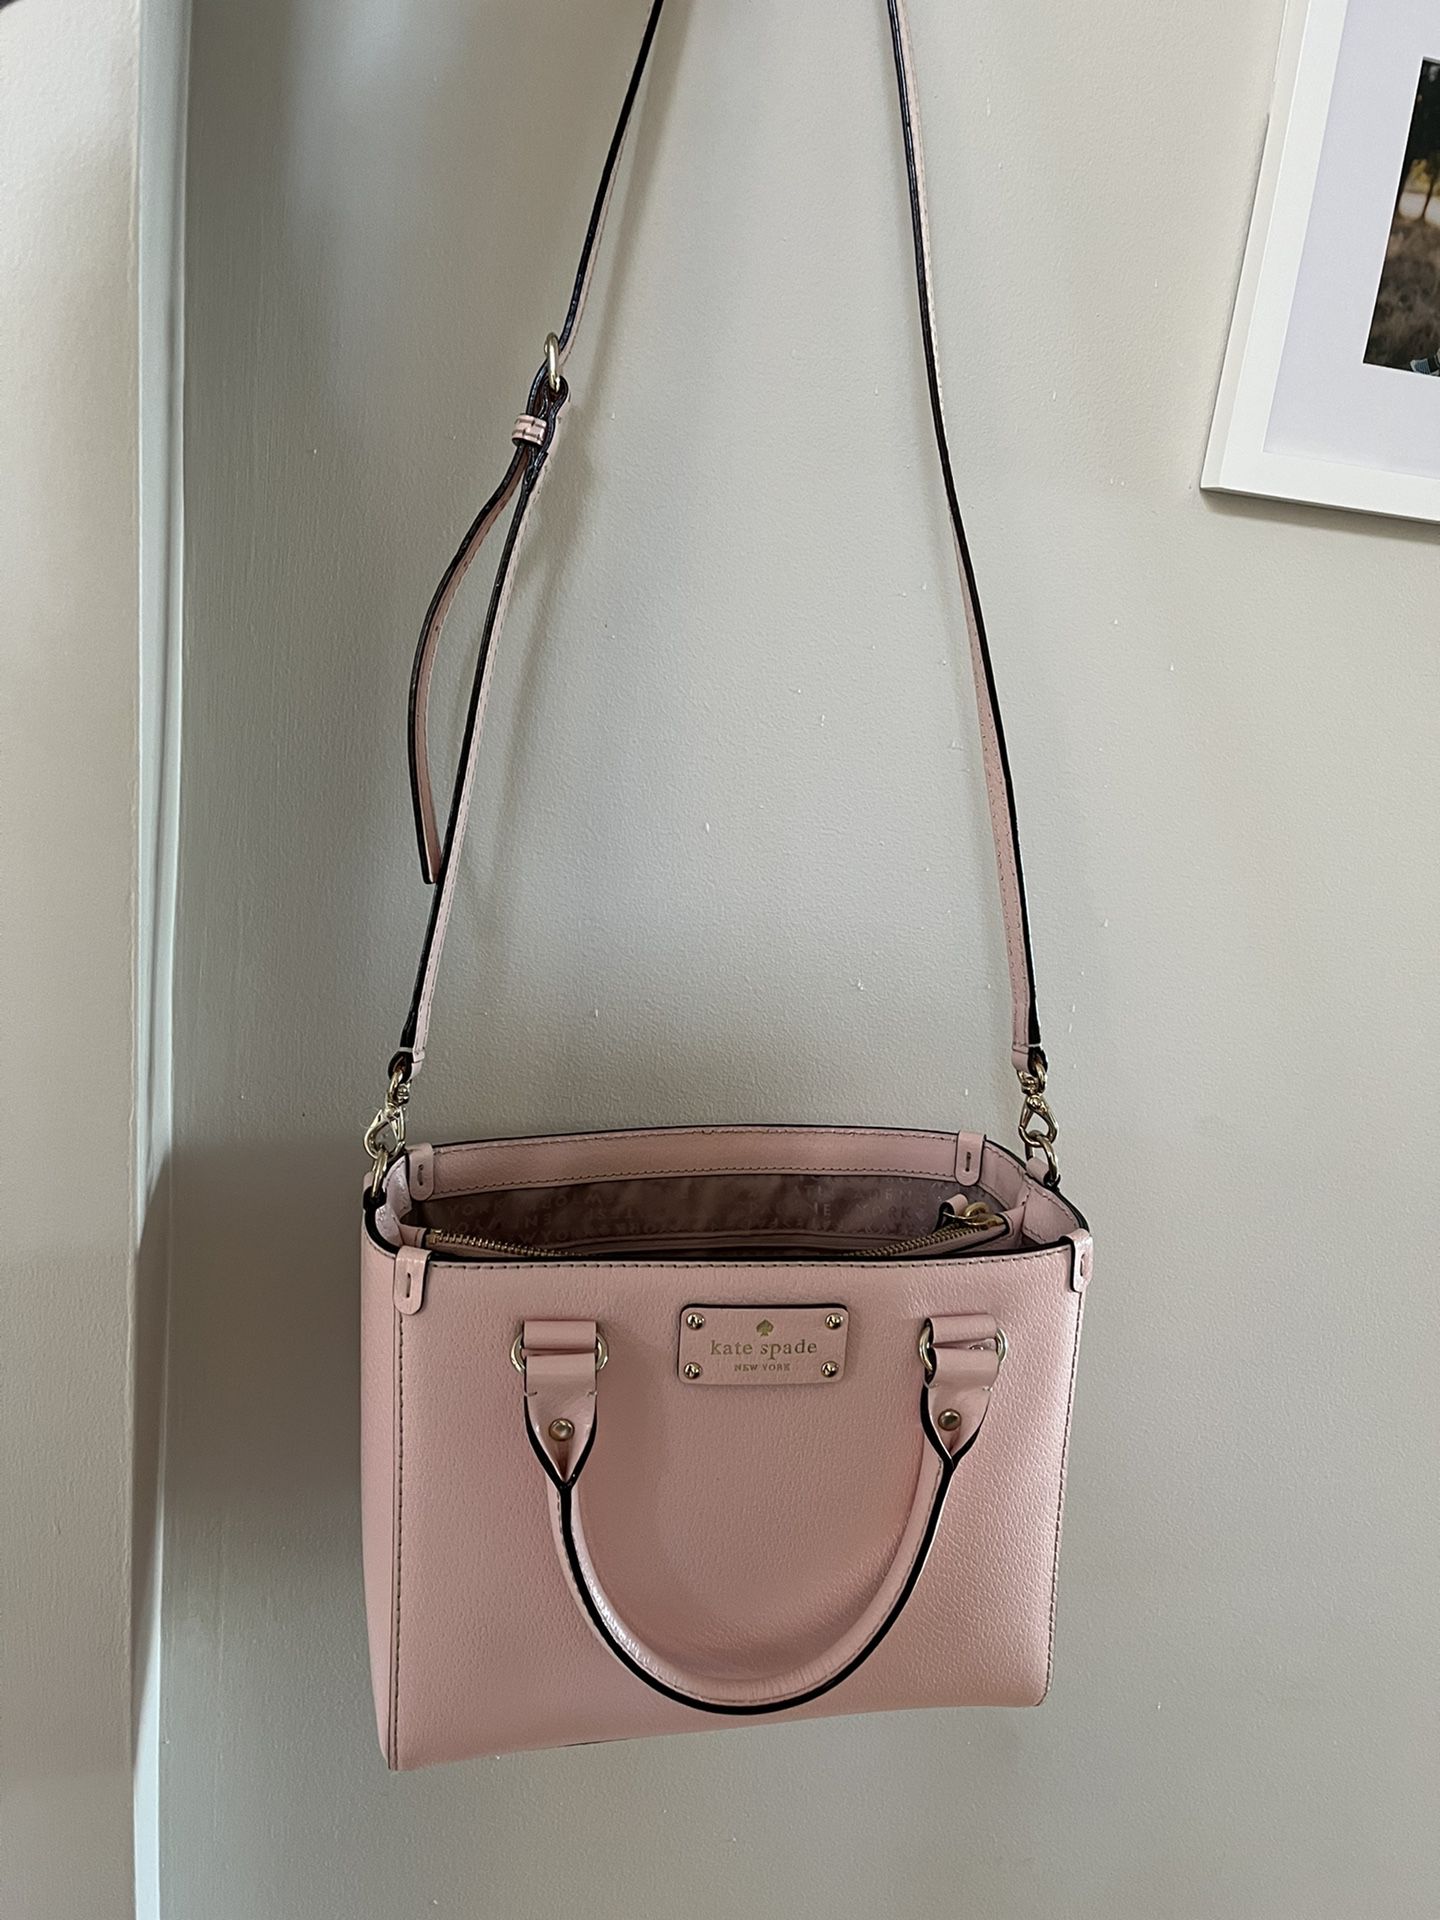 Kate Spade Crossbody Handbag (like NEW)